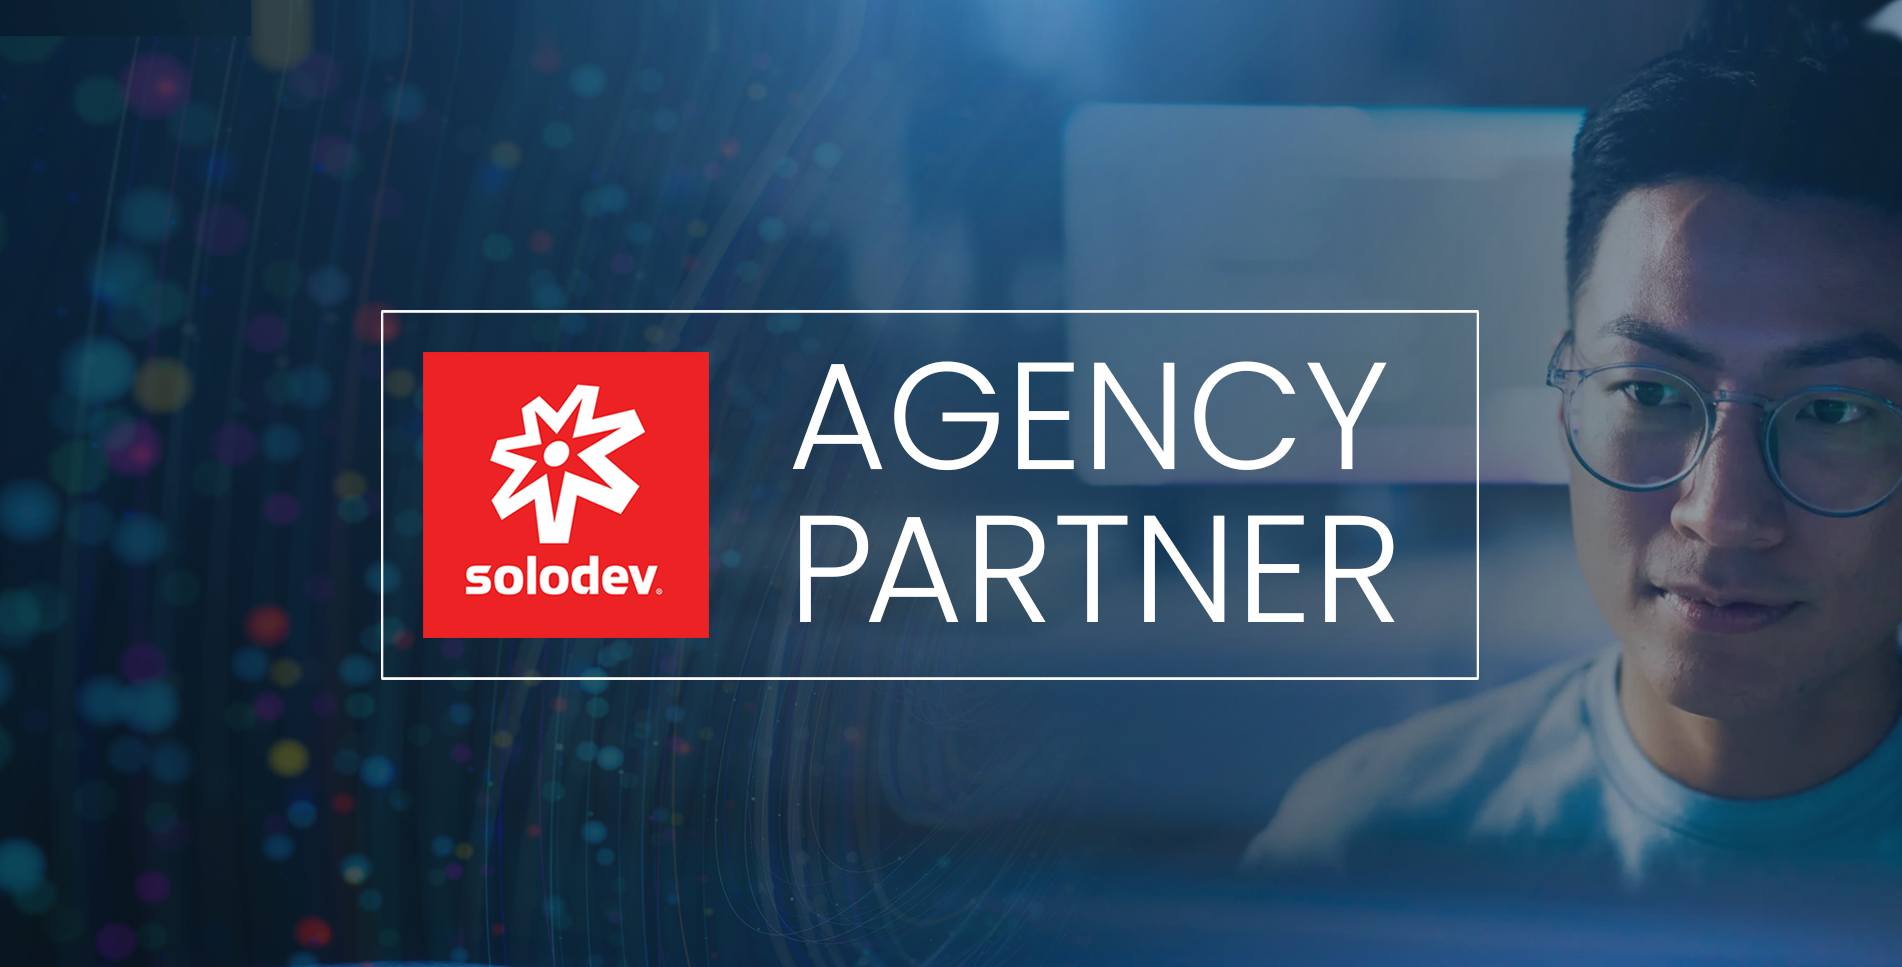 Join the Solodev Agency Partner Program and start developing new opportunities